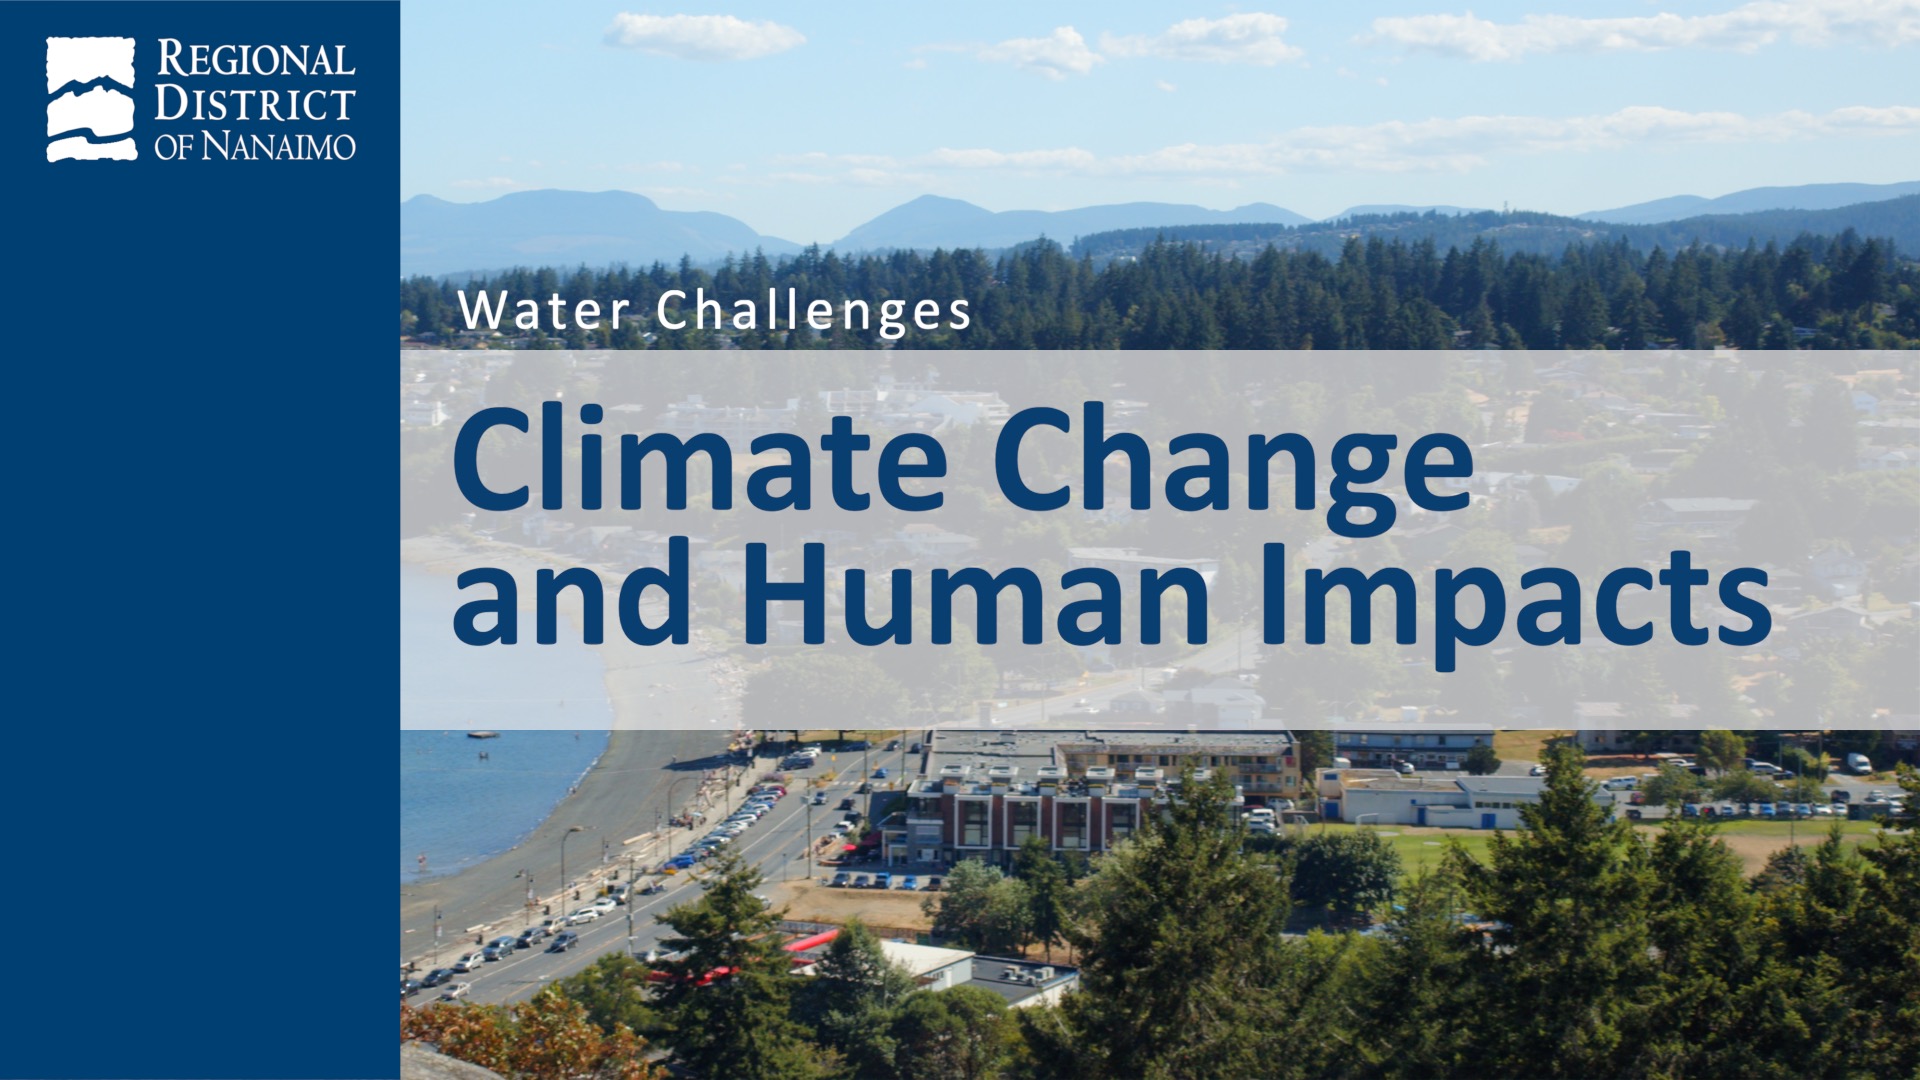 Video 4 - Water Challenges